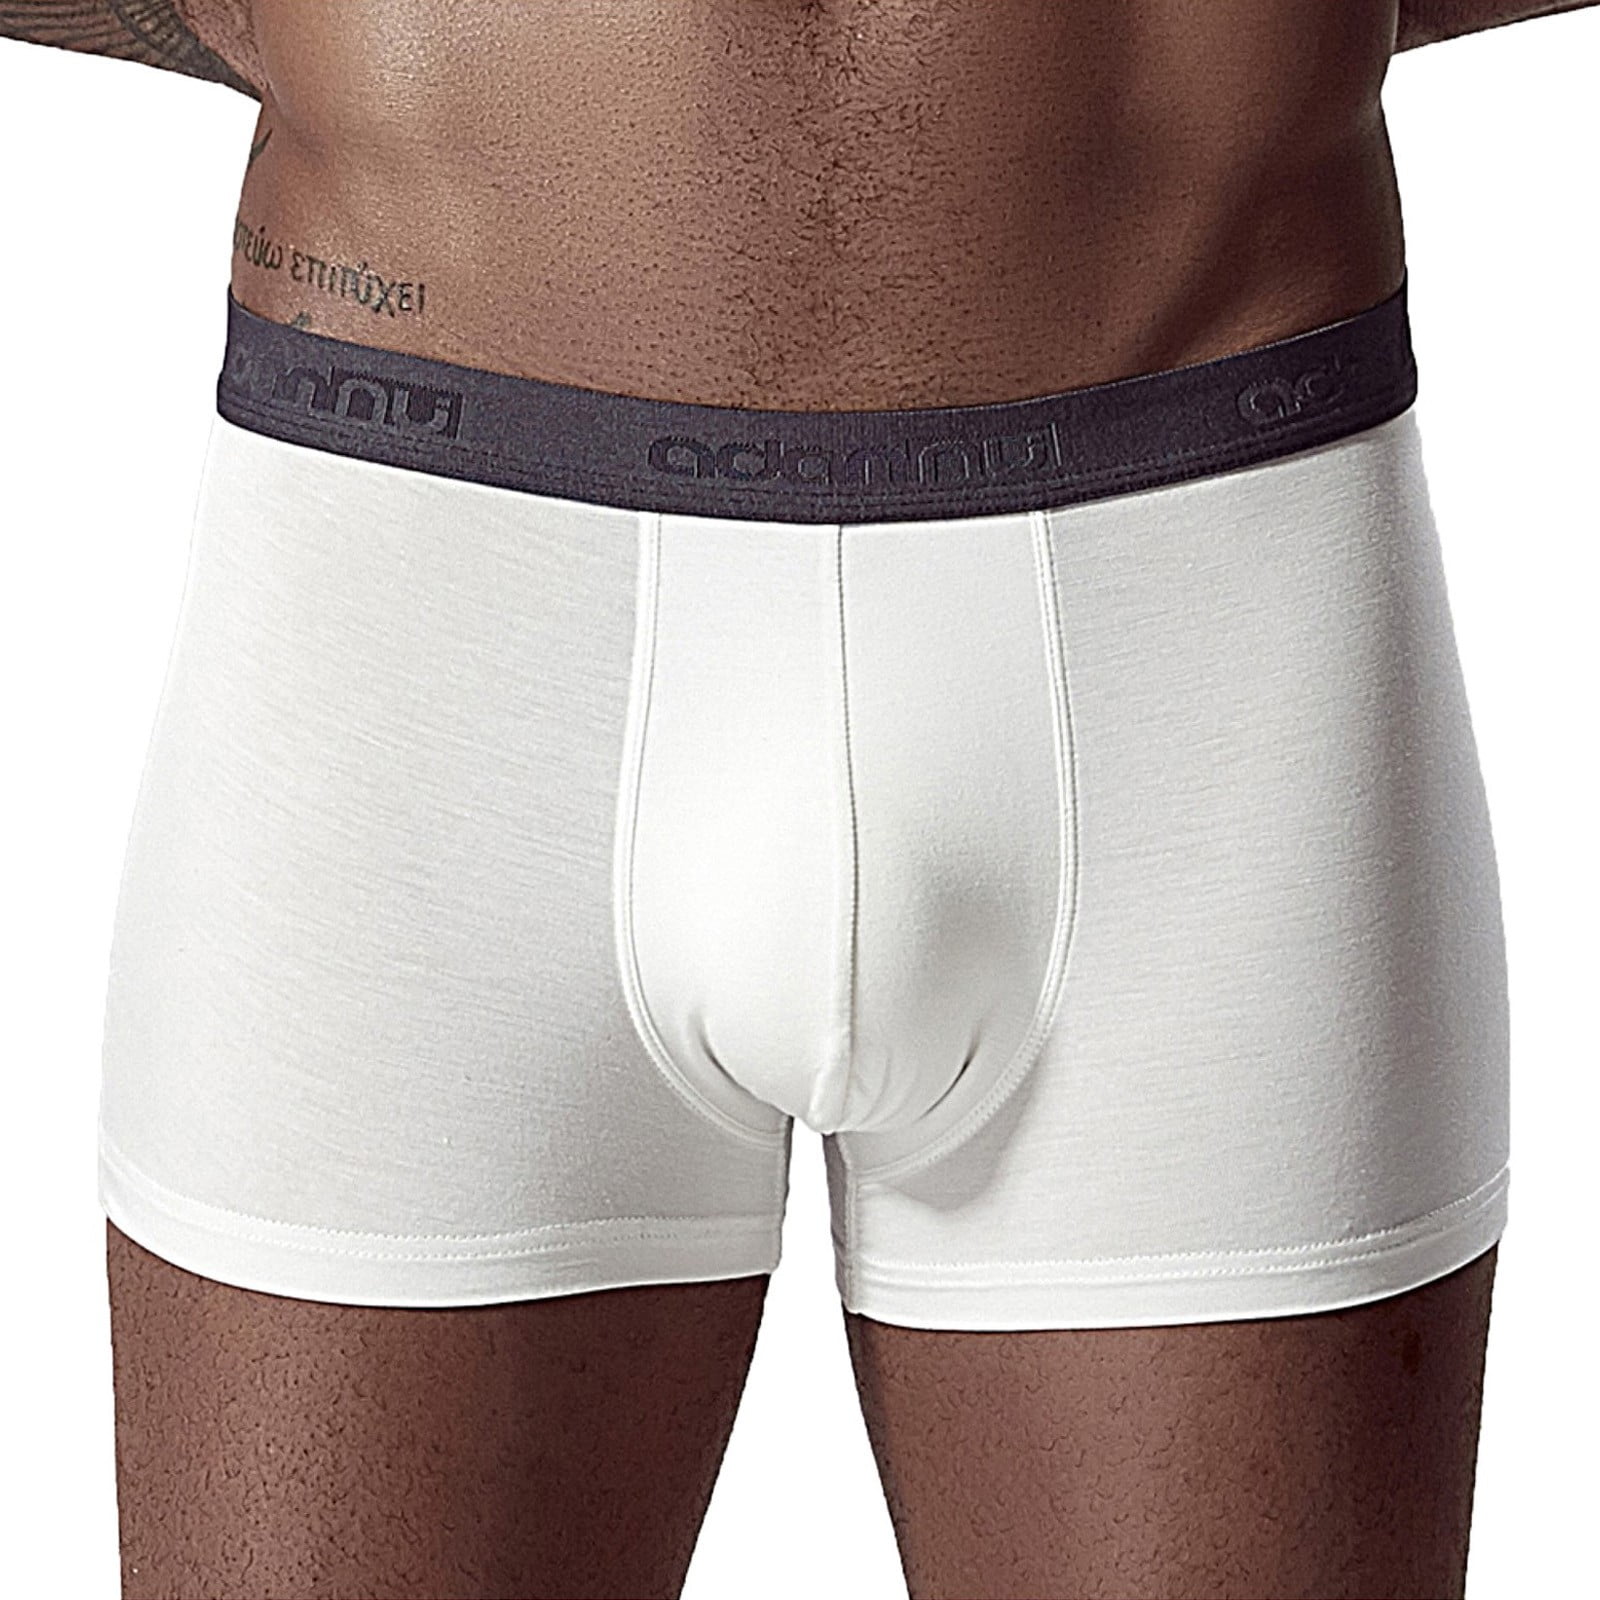 Papi Brazilian Cut Plaid and Solid Underwear Trunks (2 Pack) (Men)